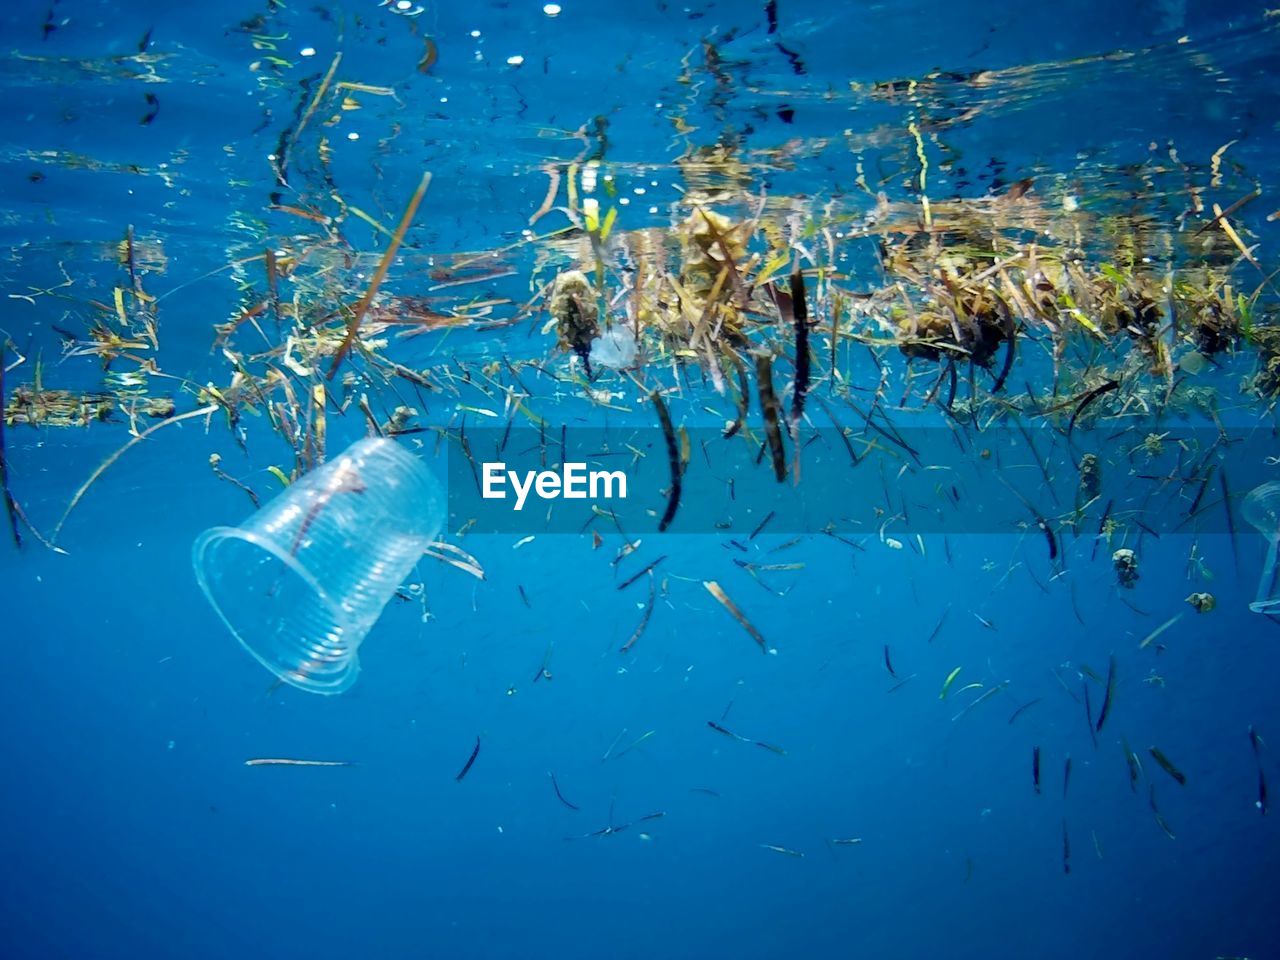 Plastic pollution/garbage in the ocean near marsa alam, egypt